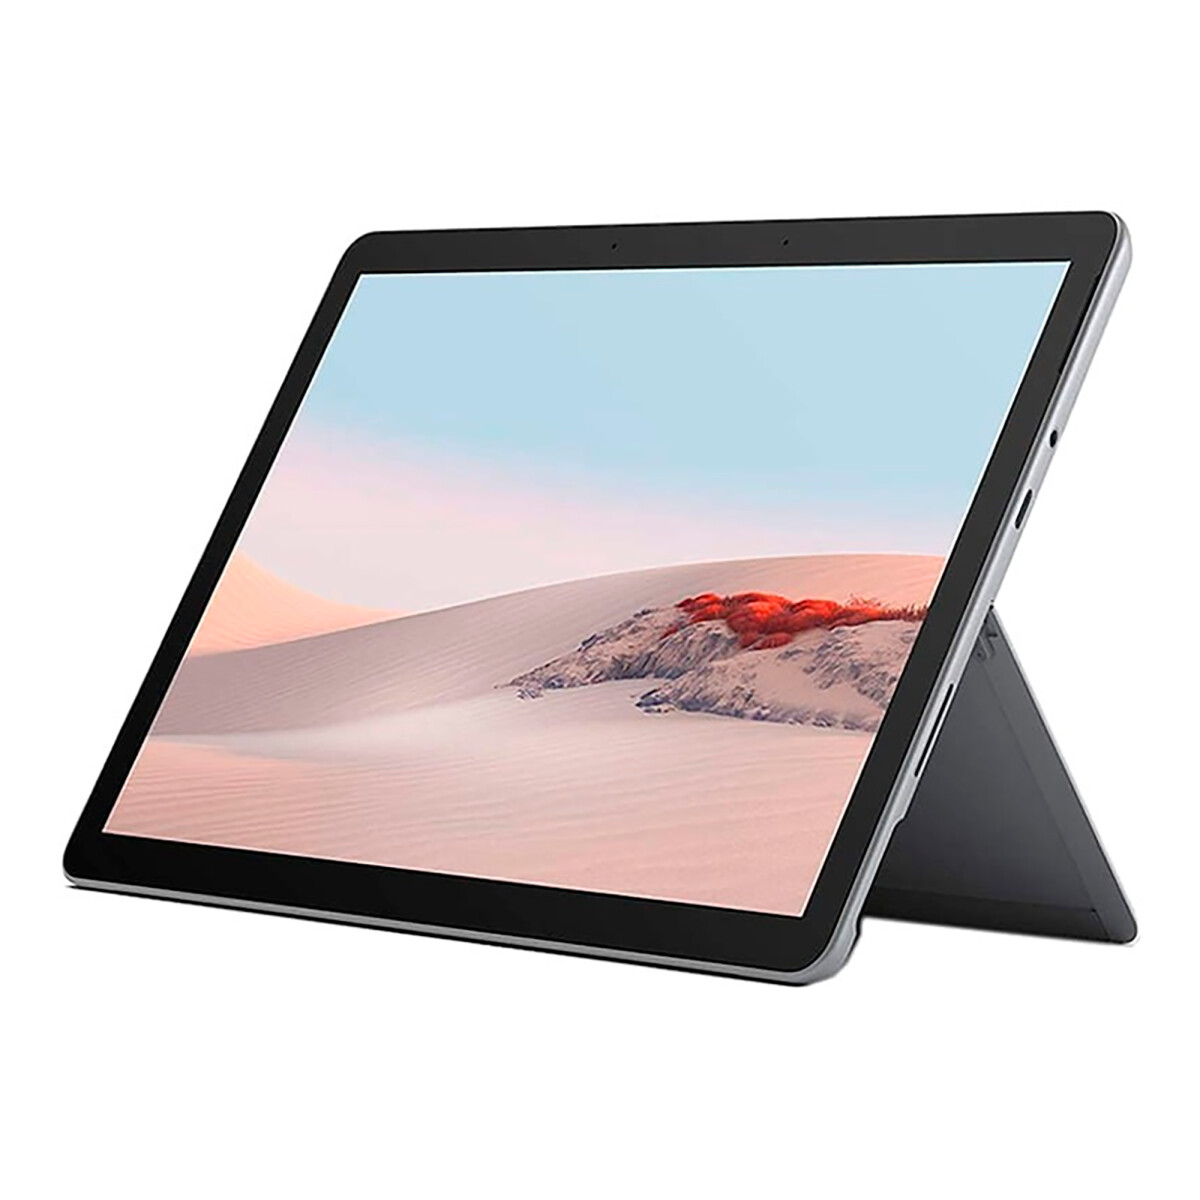 Microsoft - Tablet Surface Go - 10" Multitáctil. Intel Pentium Gold 4415Y. Intel Hd 615. Windows 10 - 001 